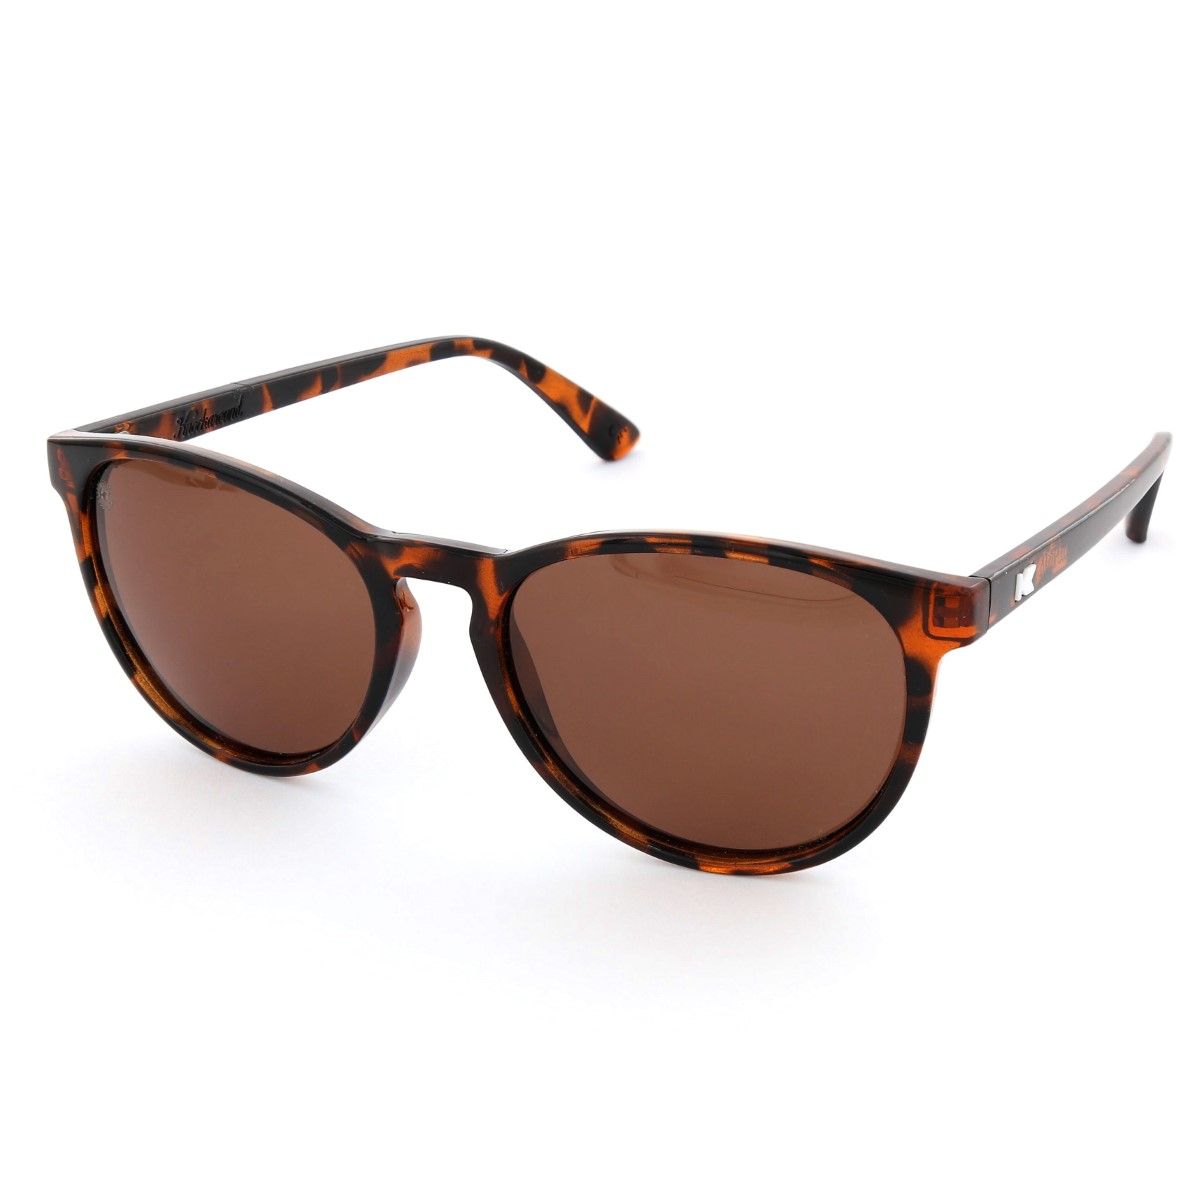 Knockaround Glossy Tortoise Shell/Polarized Amber Mai Tais Unisex Sunglasses Brown